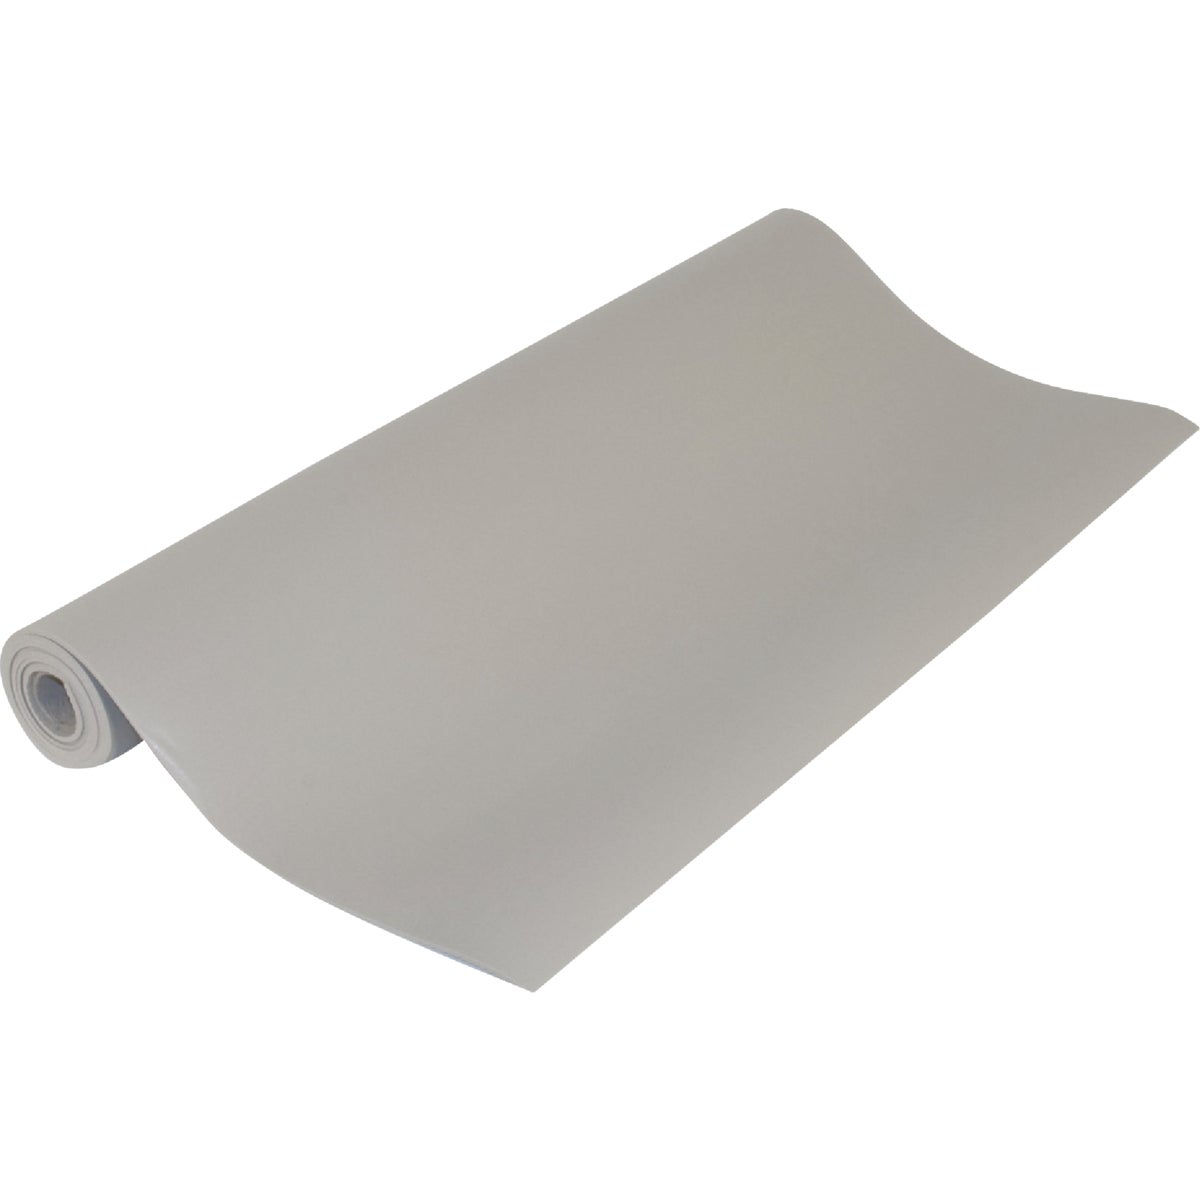 Con-Tact 18 In. x 4 Ft. Black Grip Premium Non-Adhesive Shelf